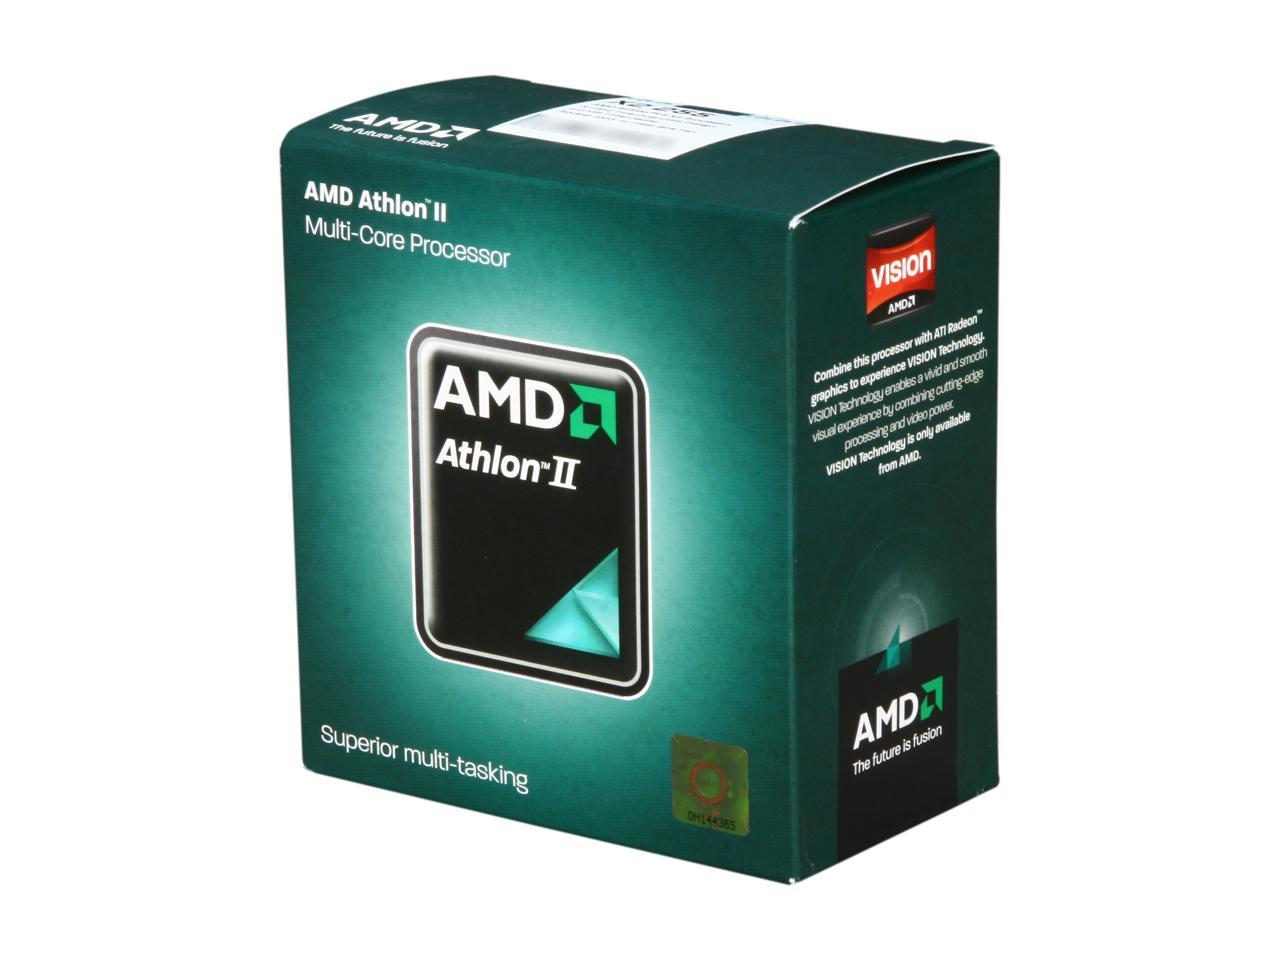 ADX255OCGMBOX AMD Athlon II X2 255 Processor 